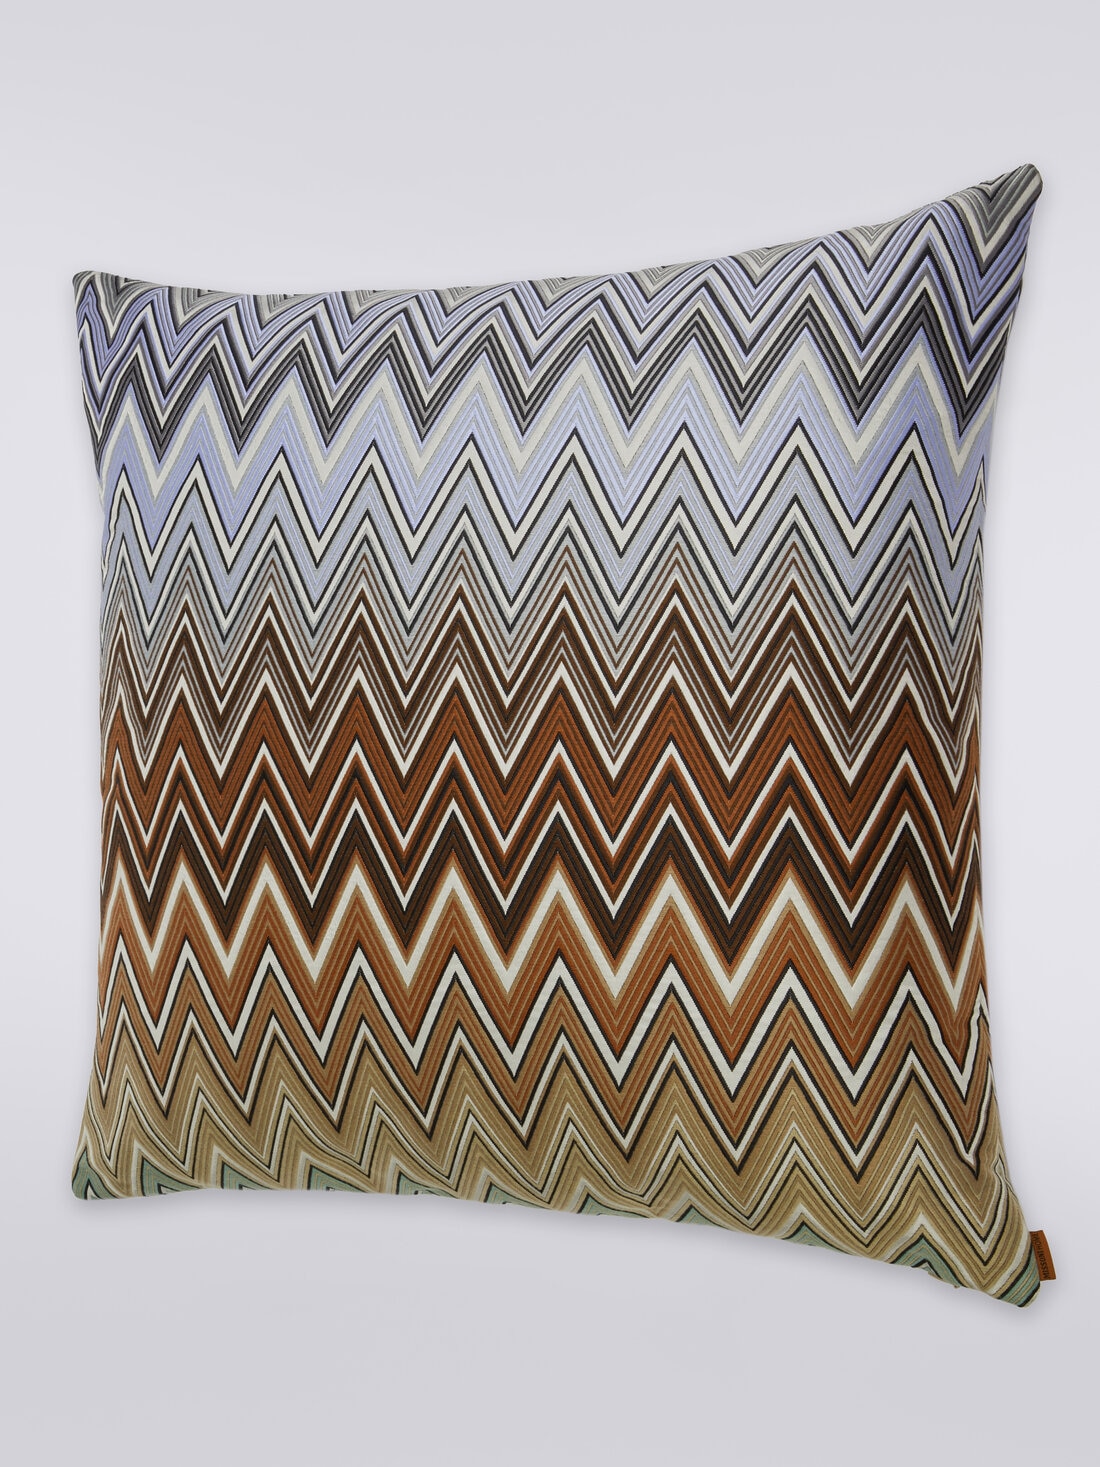 Birmingham cushion 60x60 cm, Multicoloured  - 8051275581161 - 1